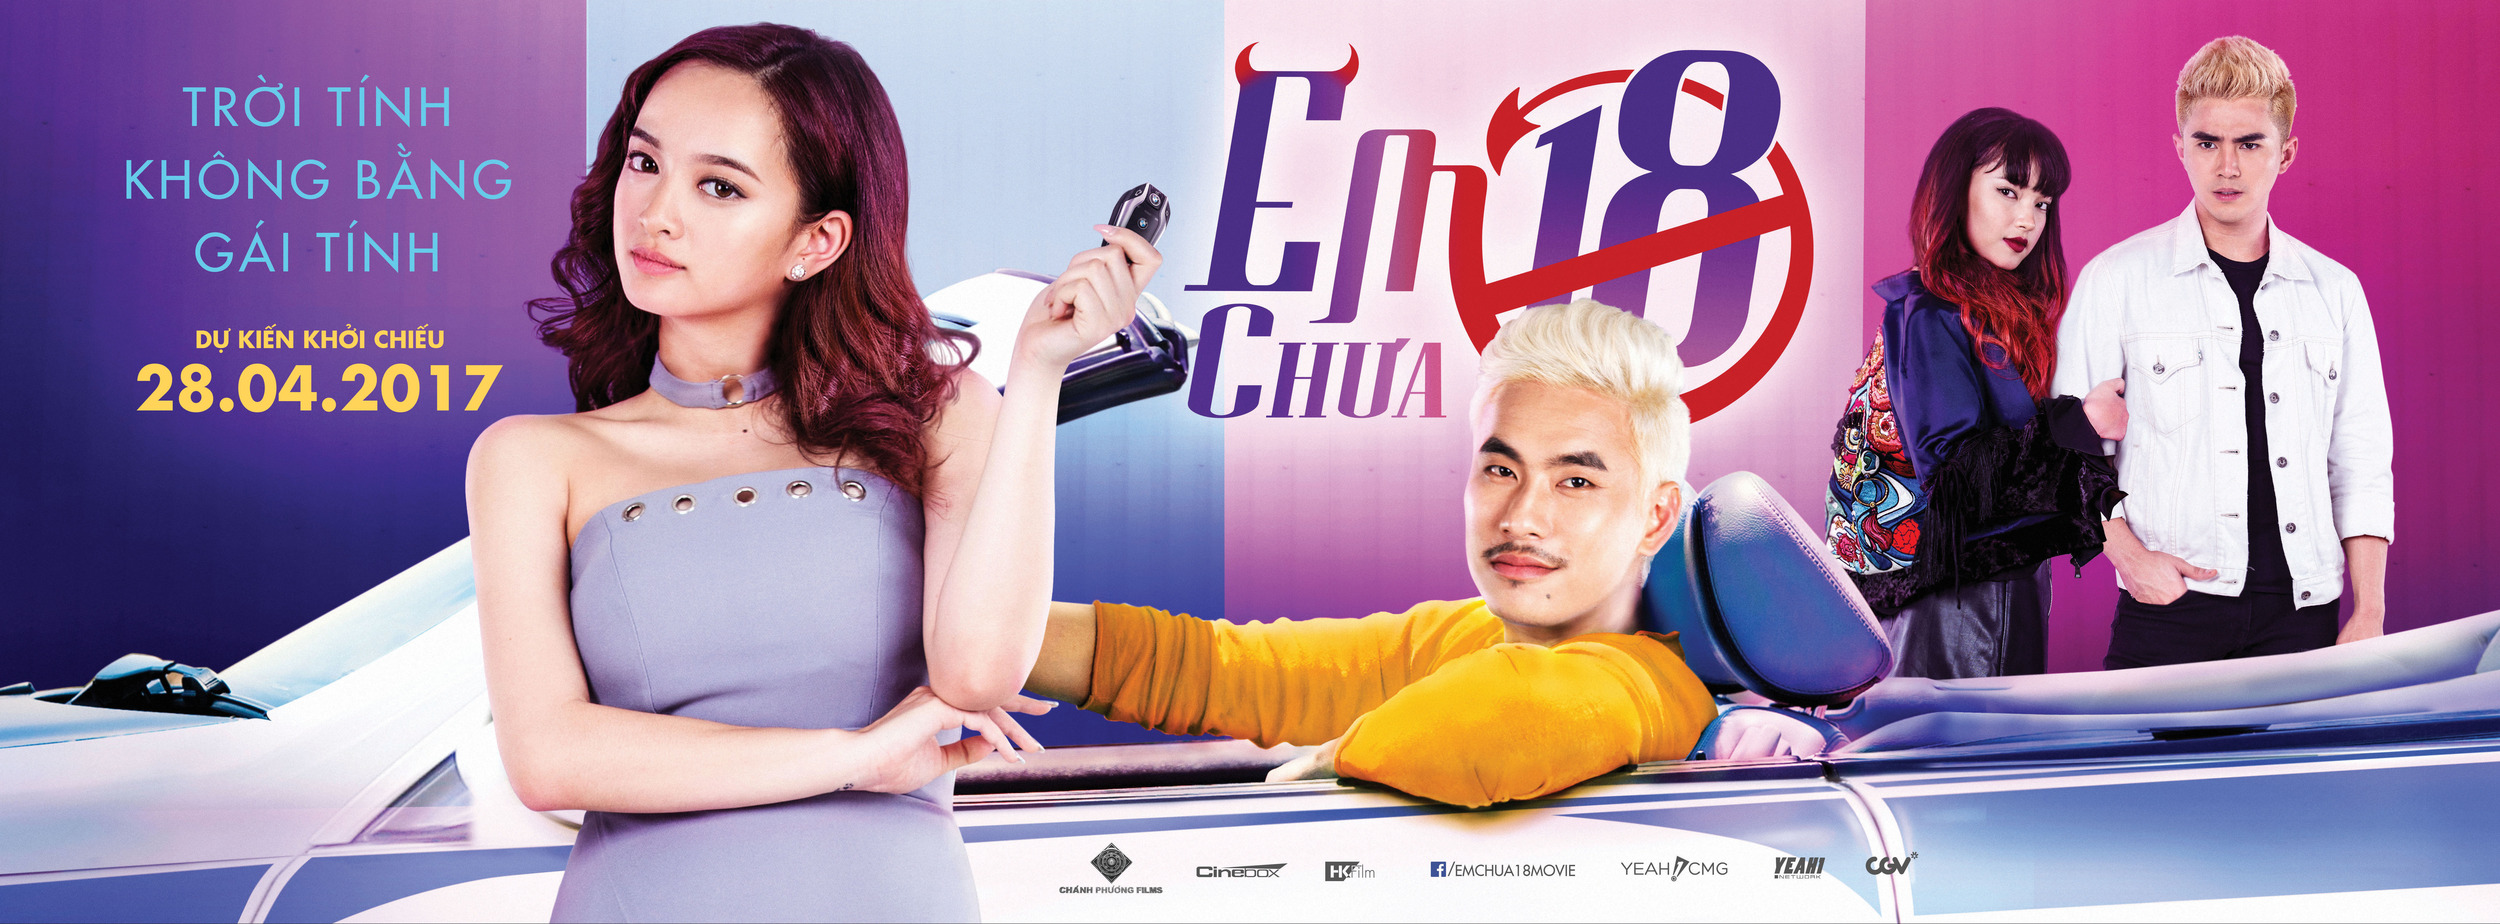 Mega Sized Movie Poster Image for Em chua 18 (#11 of 11)